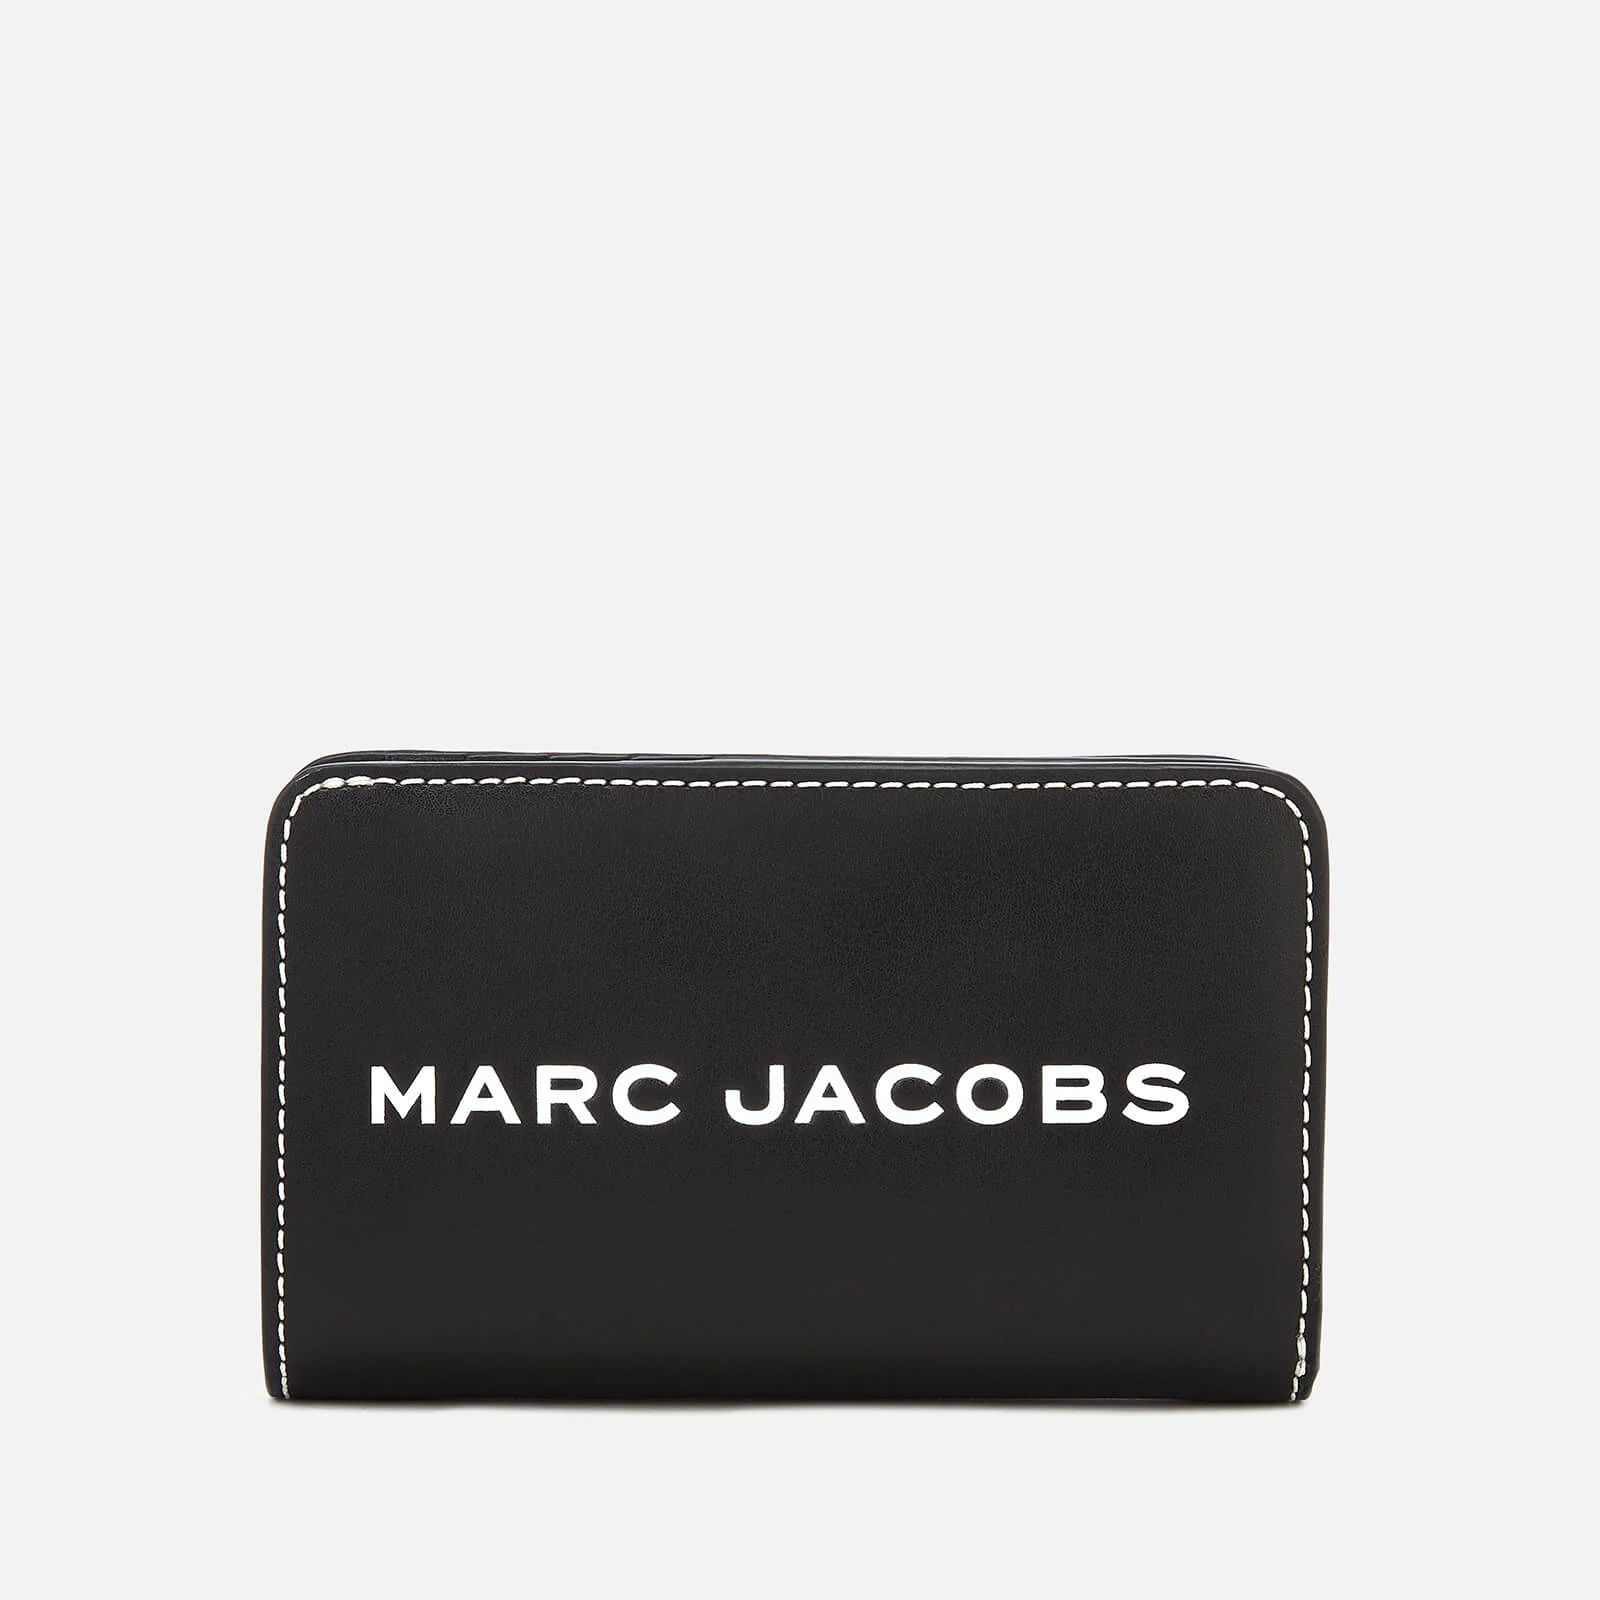 Marc Jacobs Women's Compact Wallet - Black Image 1